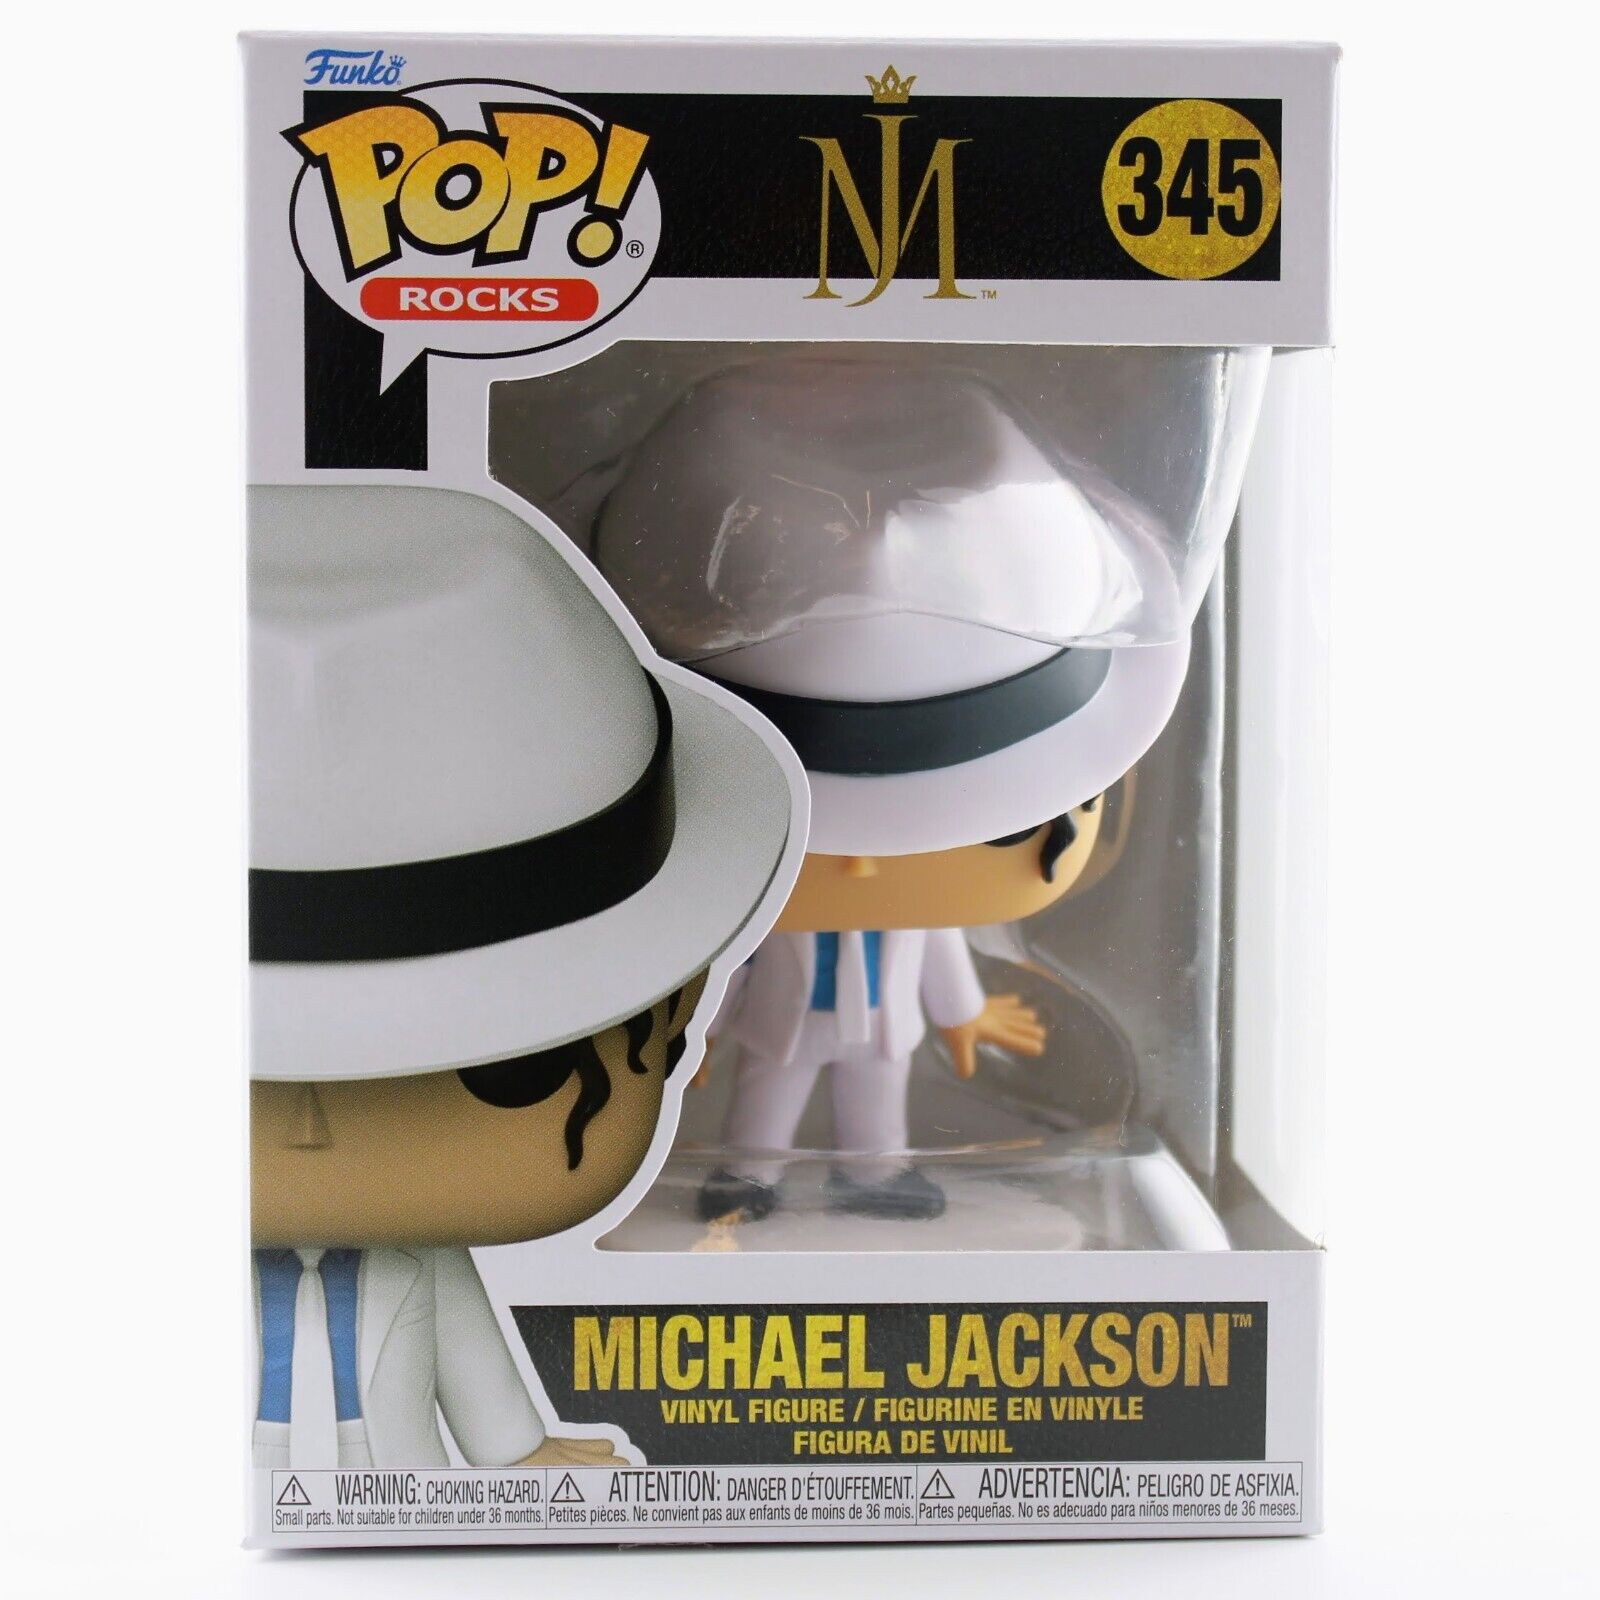 Funko Pop Michael Jackson Smooth Criminal #24 Authentic Vinyl Figure W/hard  Top